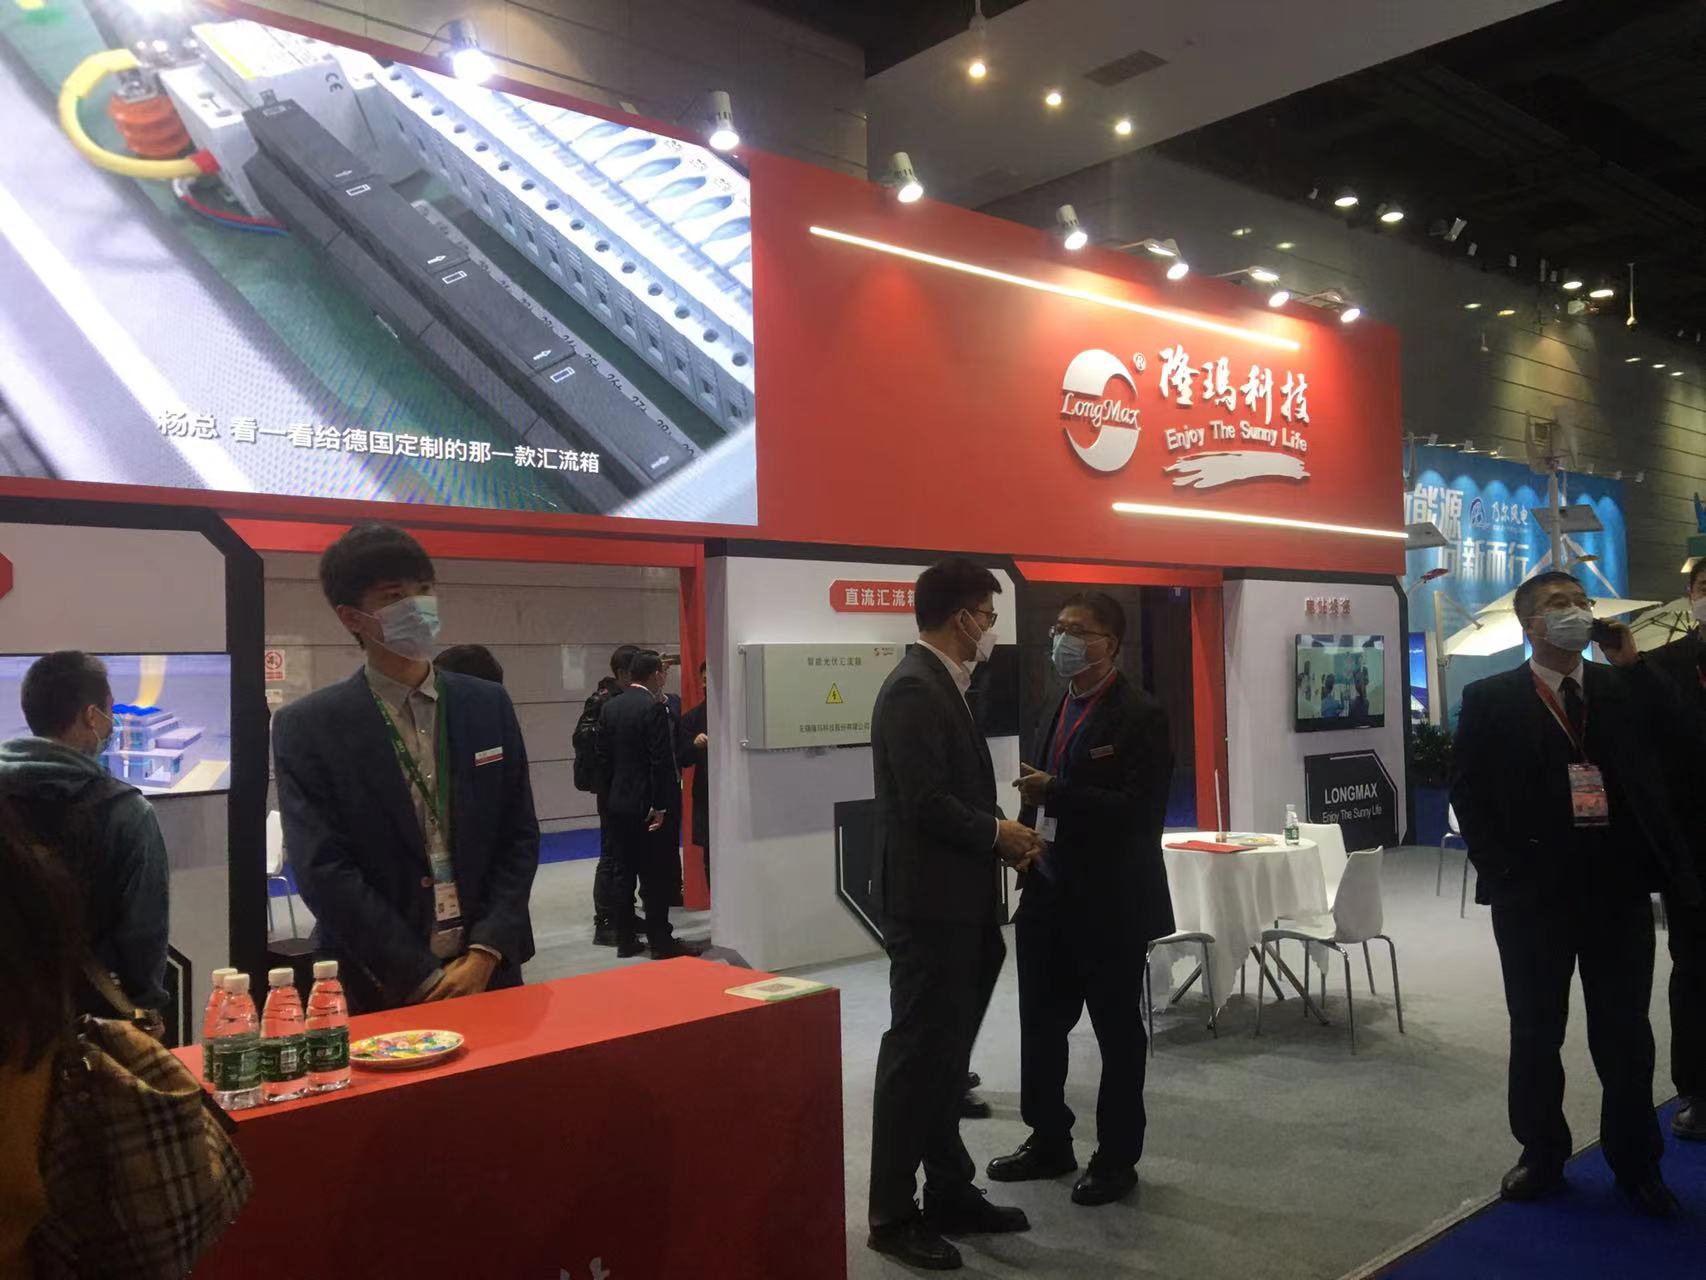 SNEC*八届(2023)储能技术和装备及应用(上海)大会暨展览会”（简称“SNEC*八届储能”）